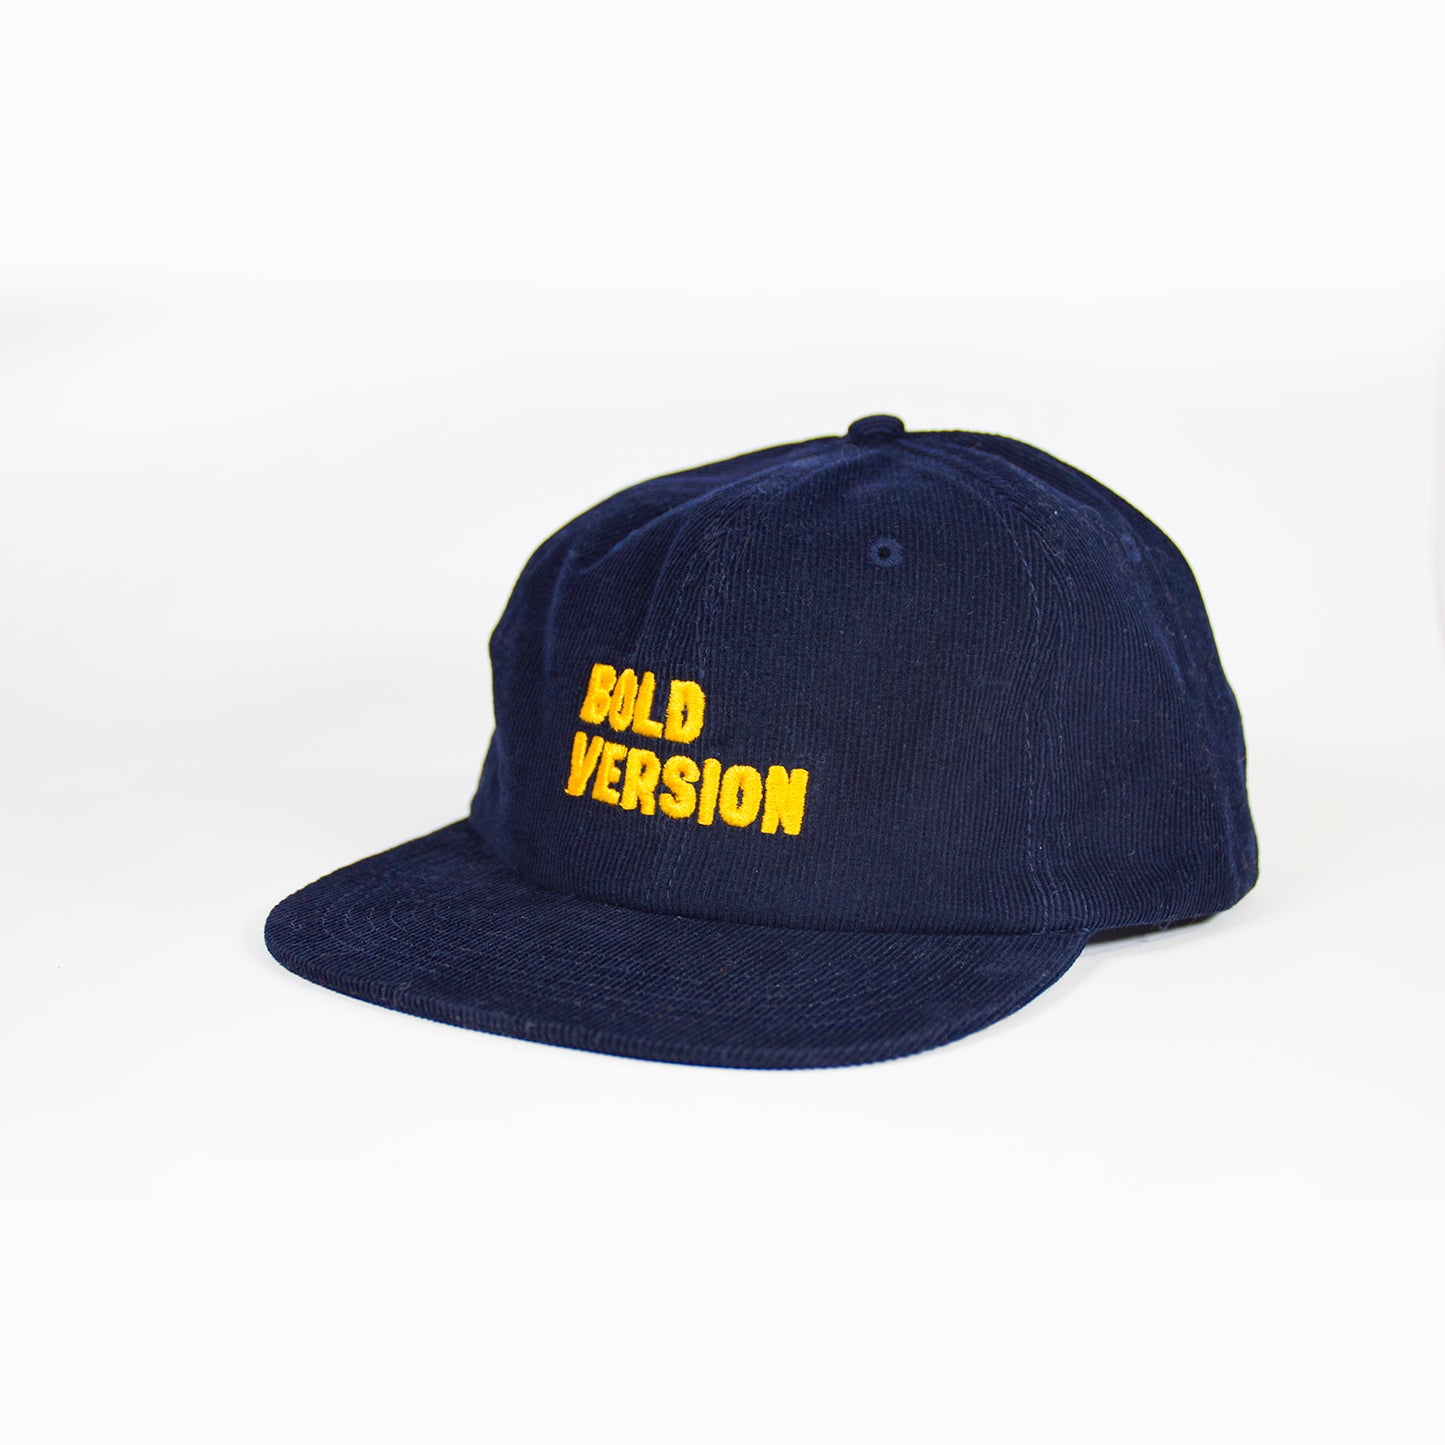 Bold Version Navy Corduroy Hat